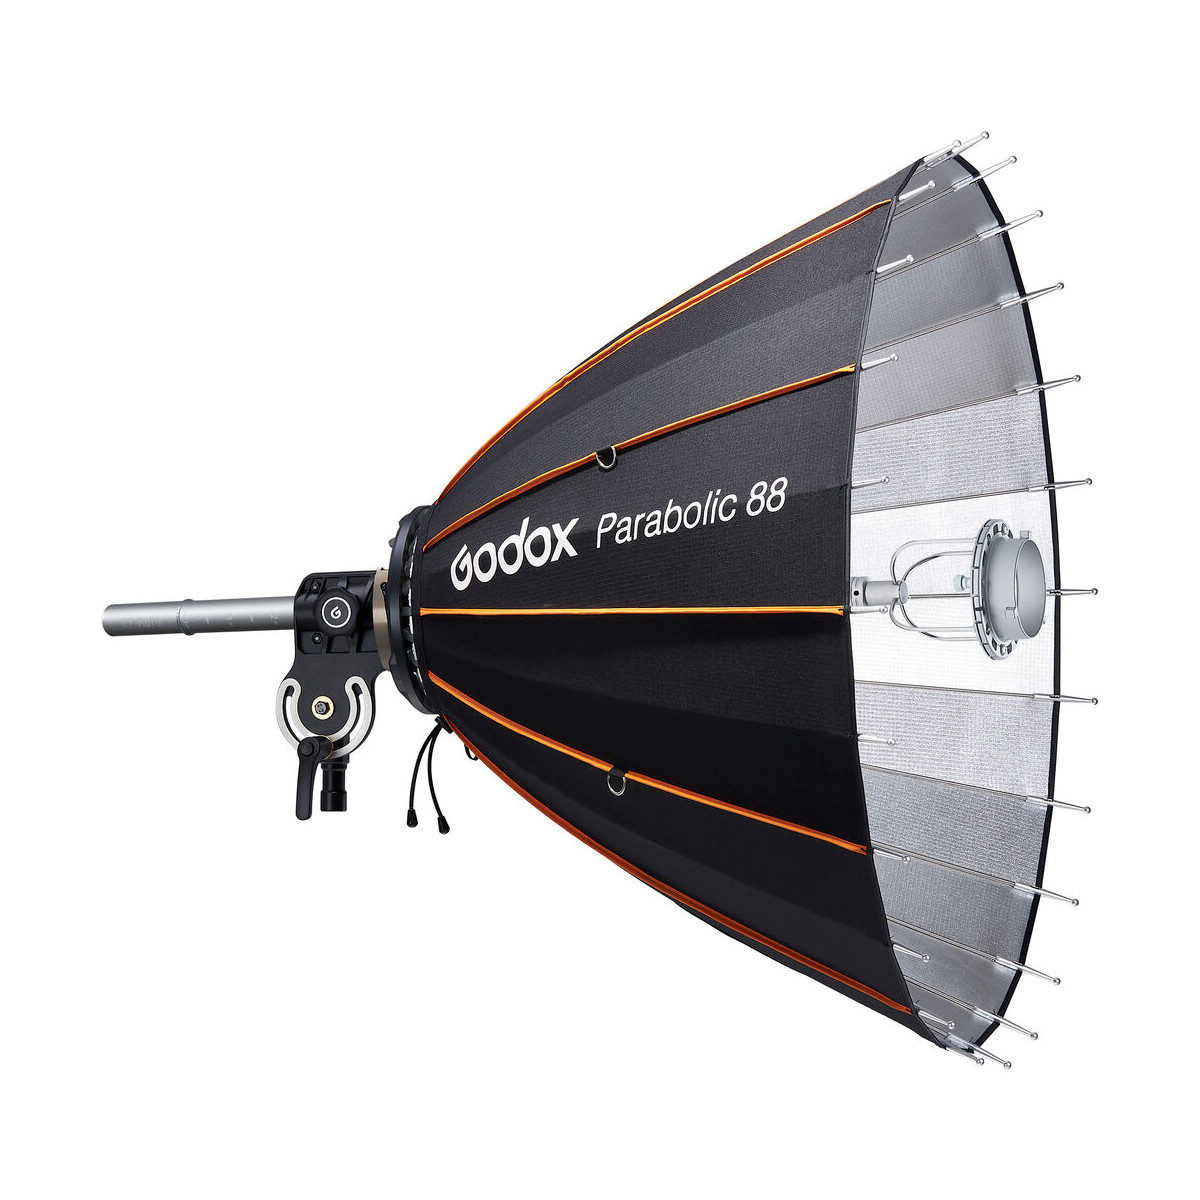 Godox P88 Parabolic Light Focusing System Kit